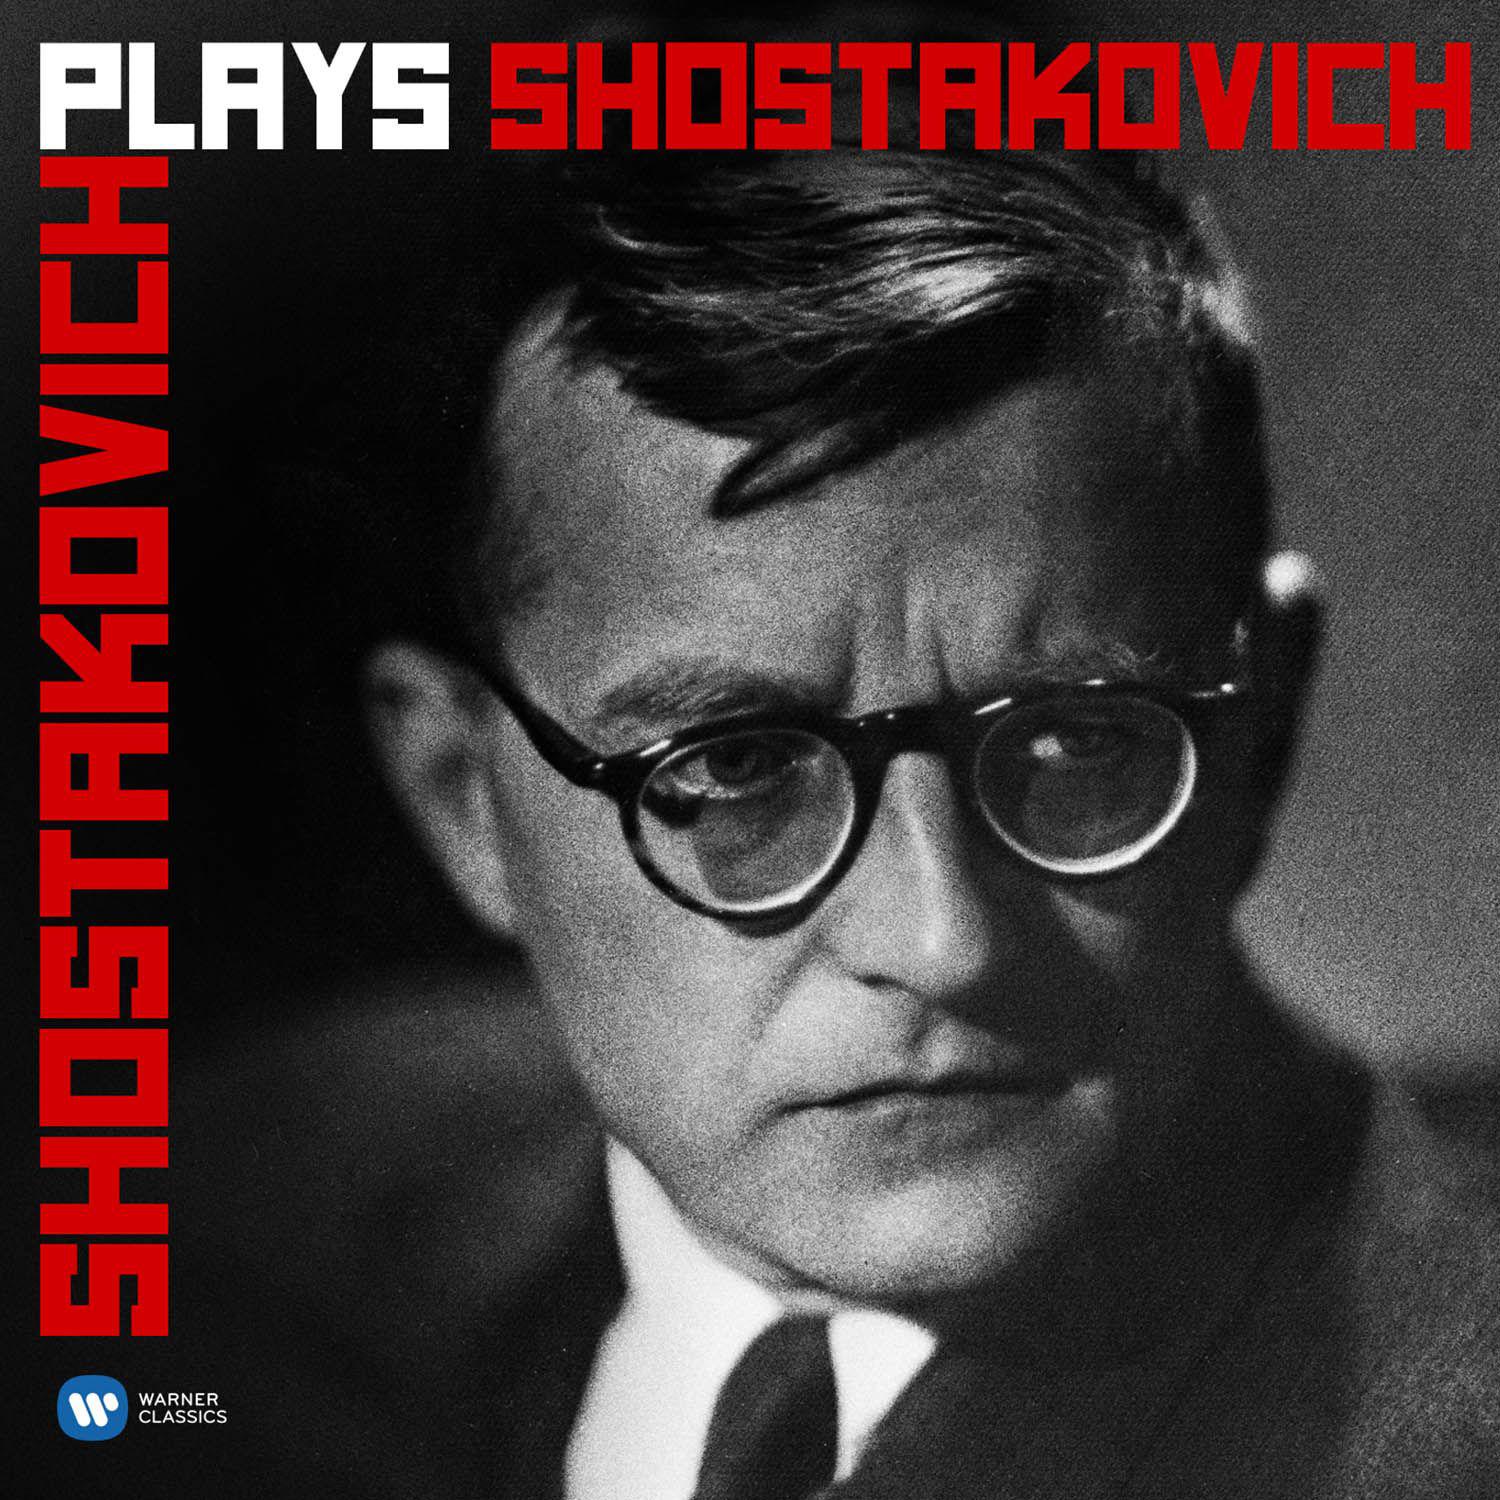 Shostakovich:24 Preludes and Fugues, Op. 87: No. 1 in C Major, Moderato